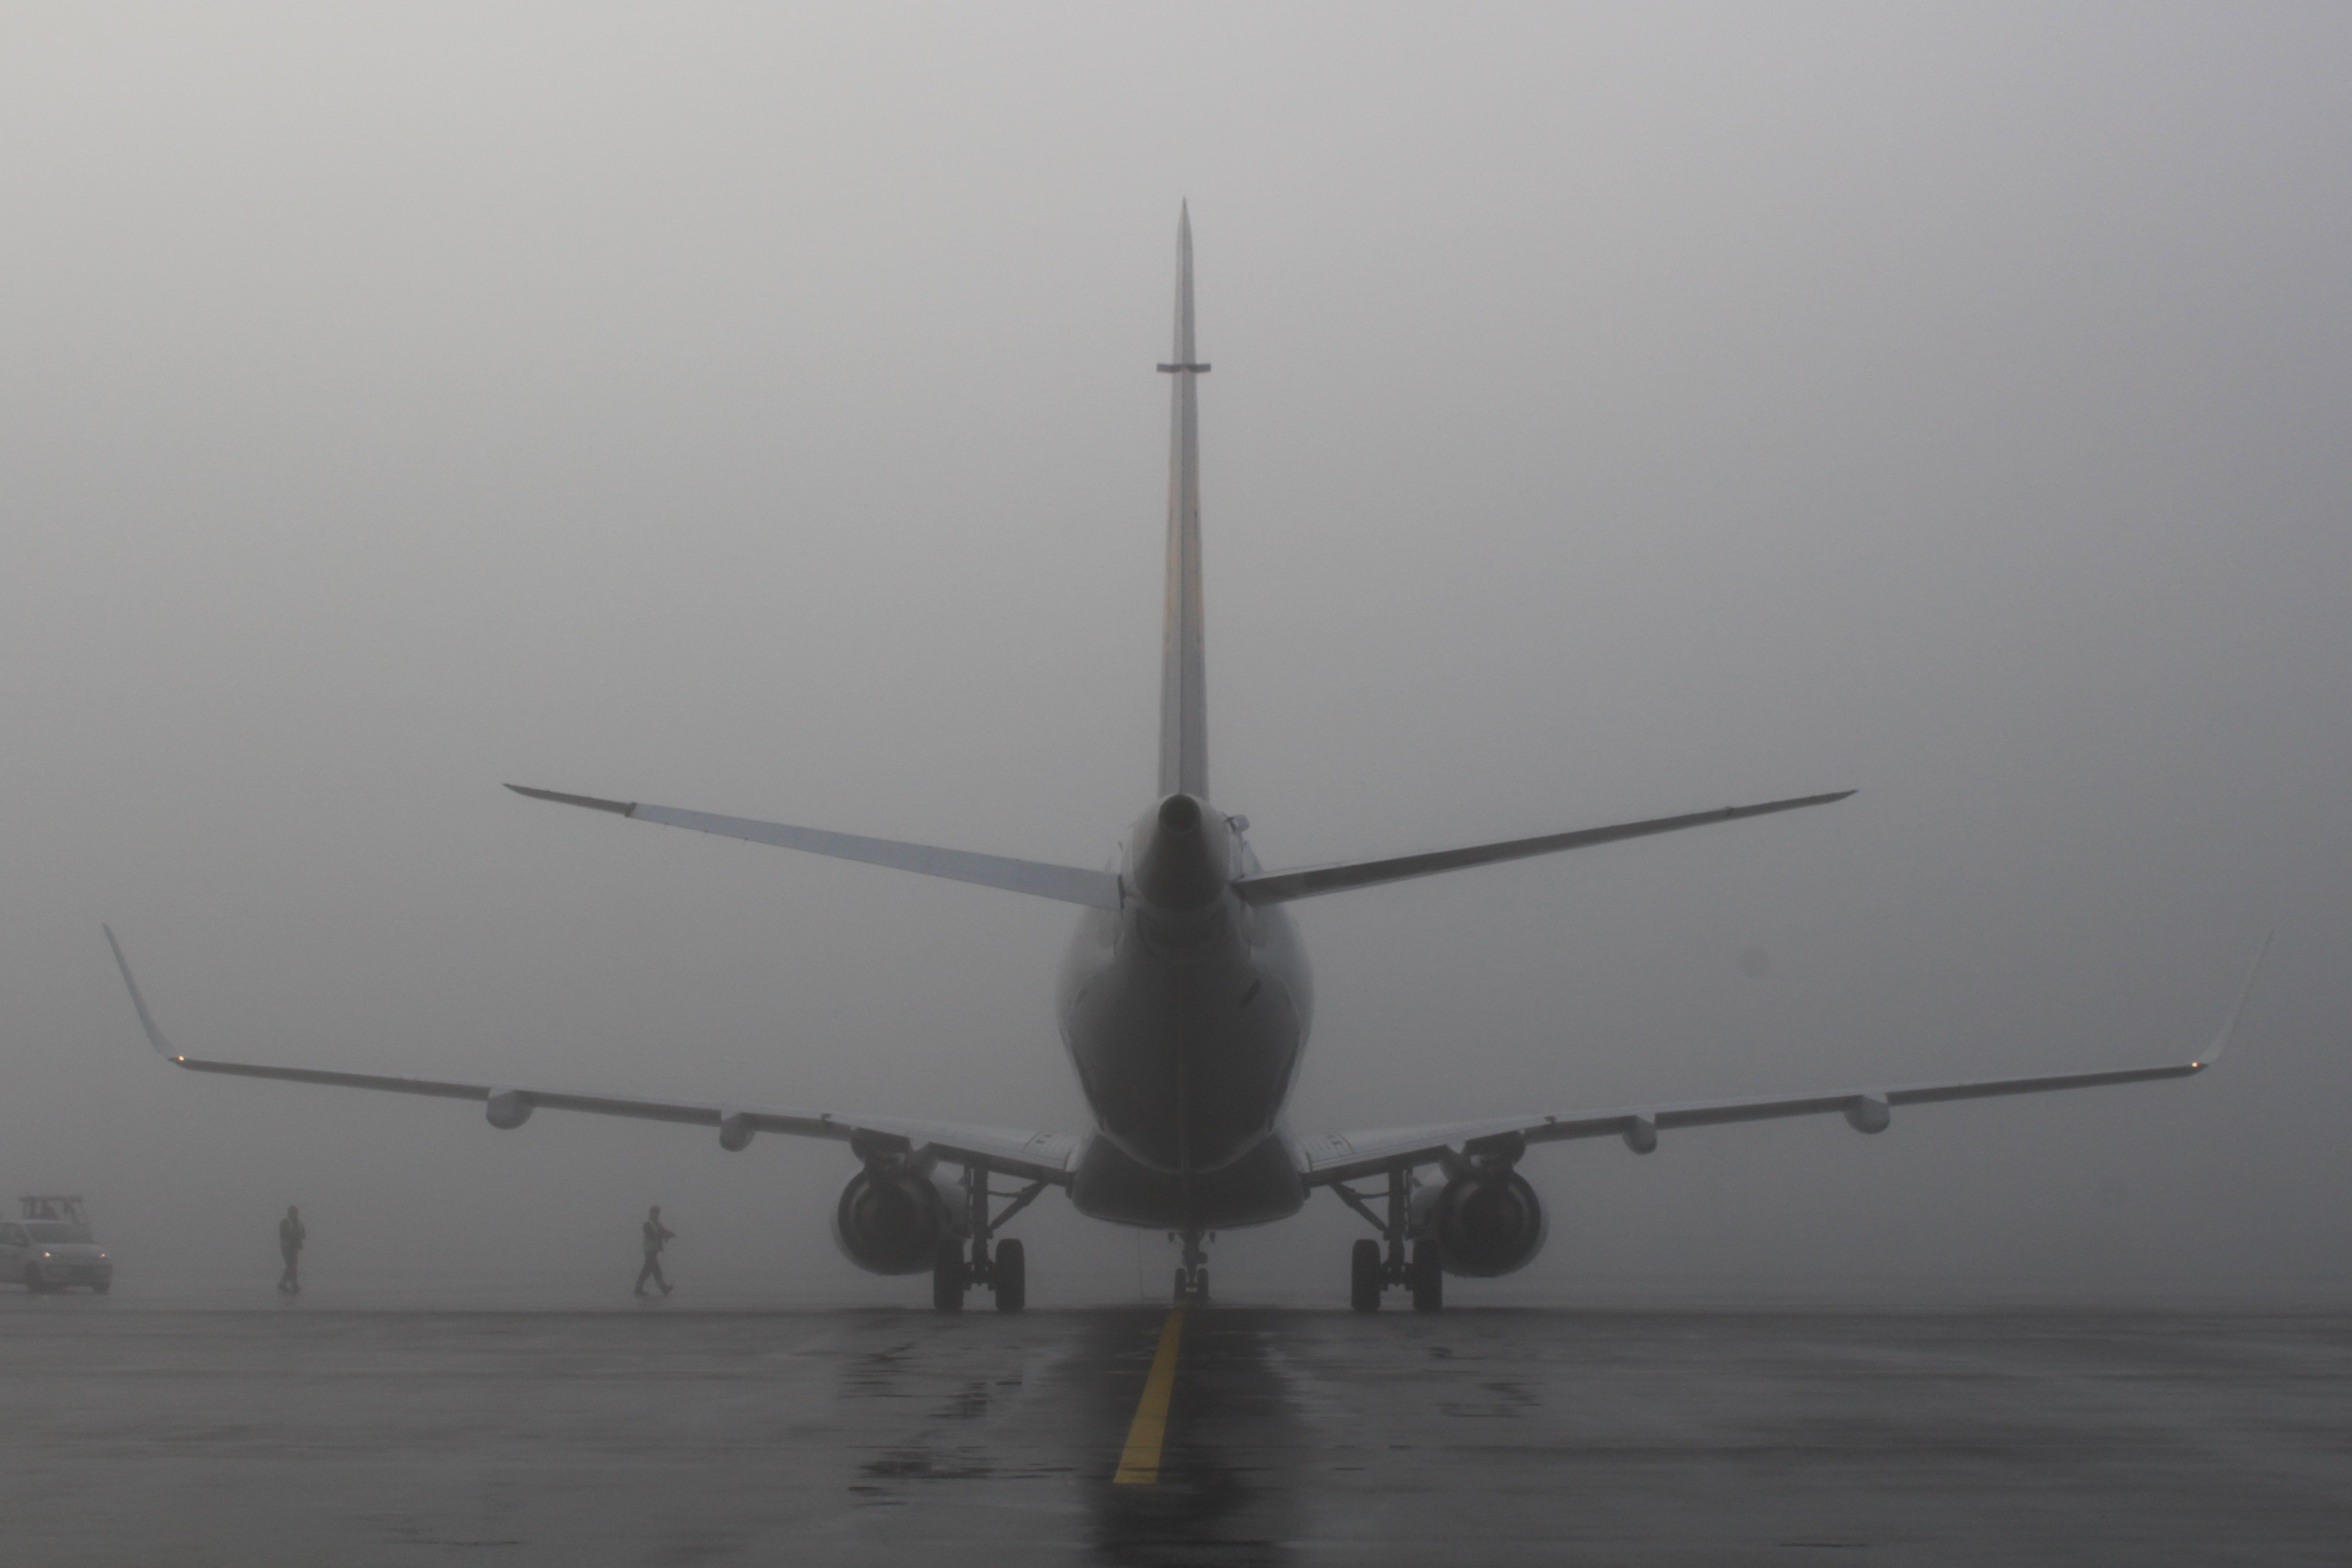 Airplane In Fog